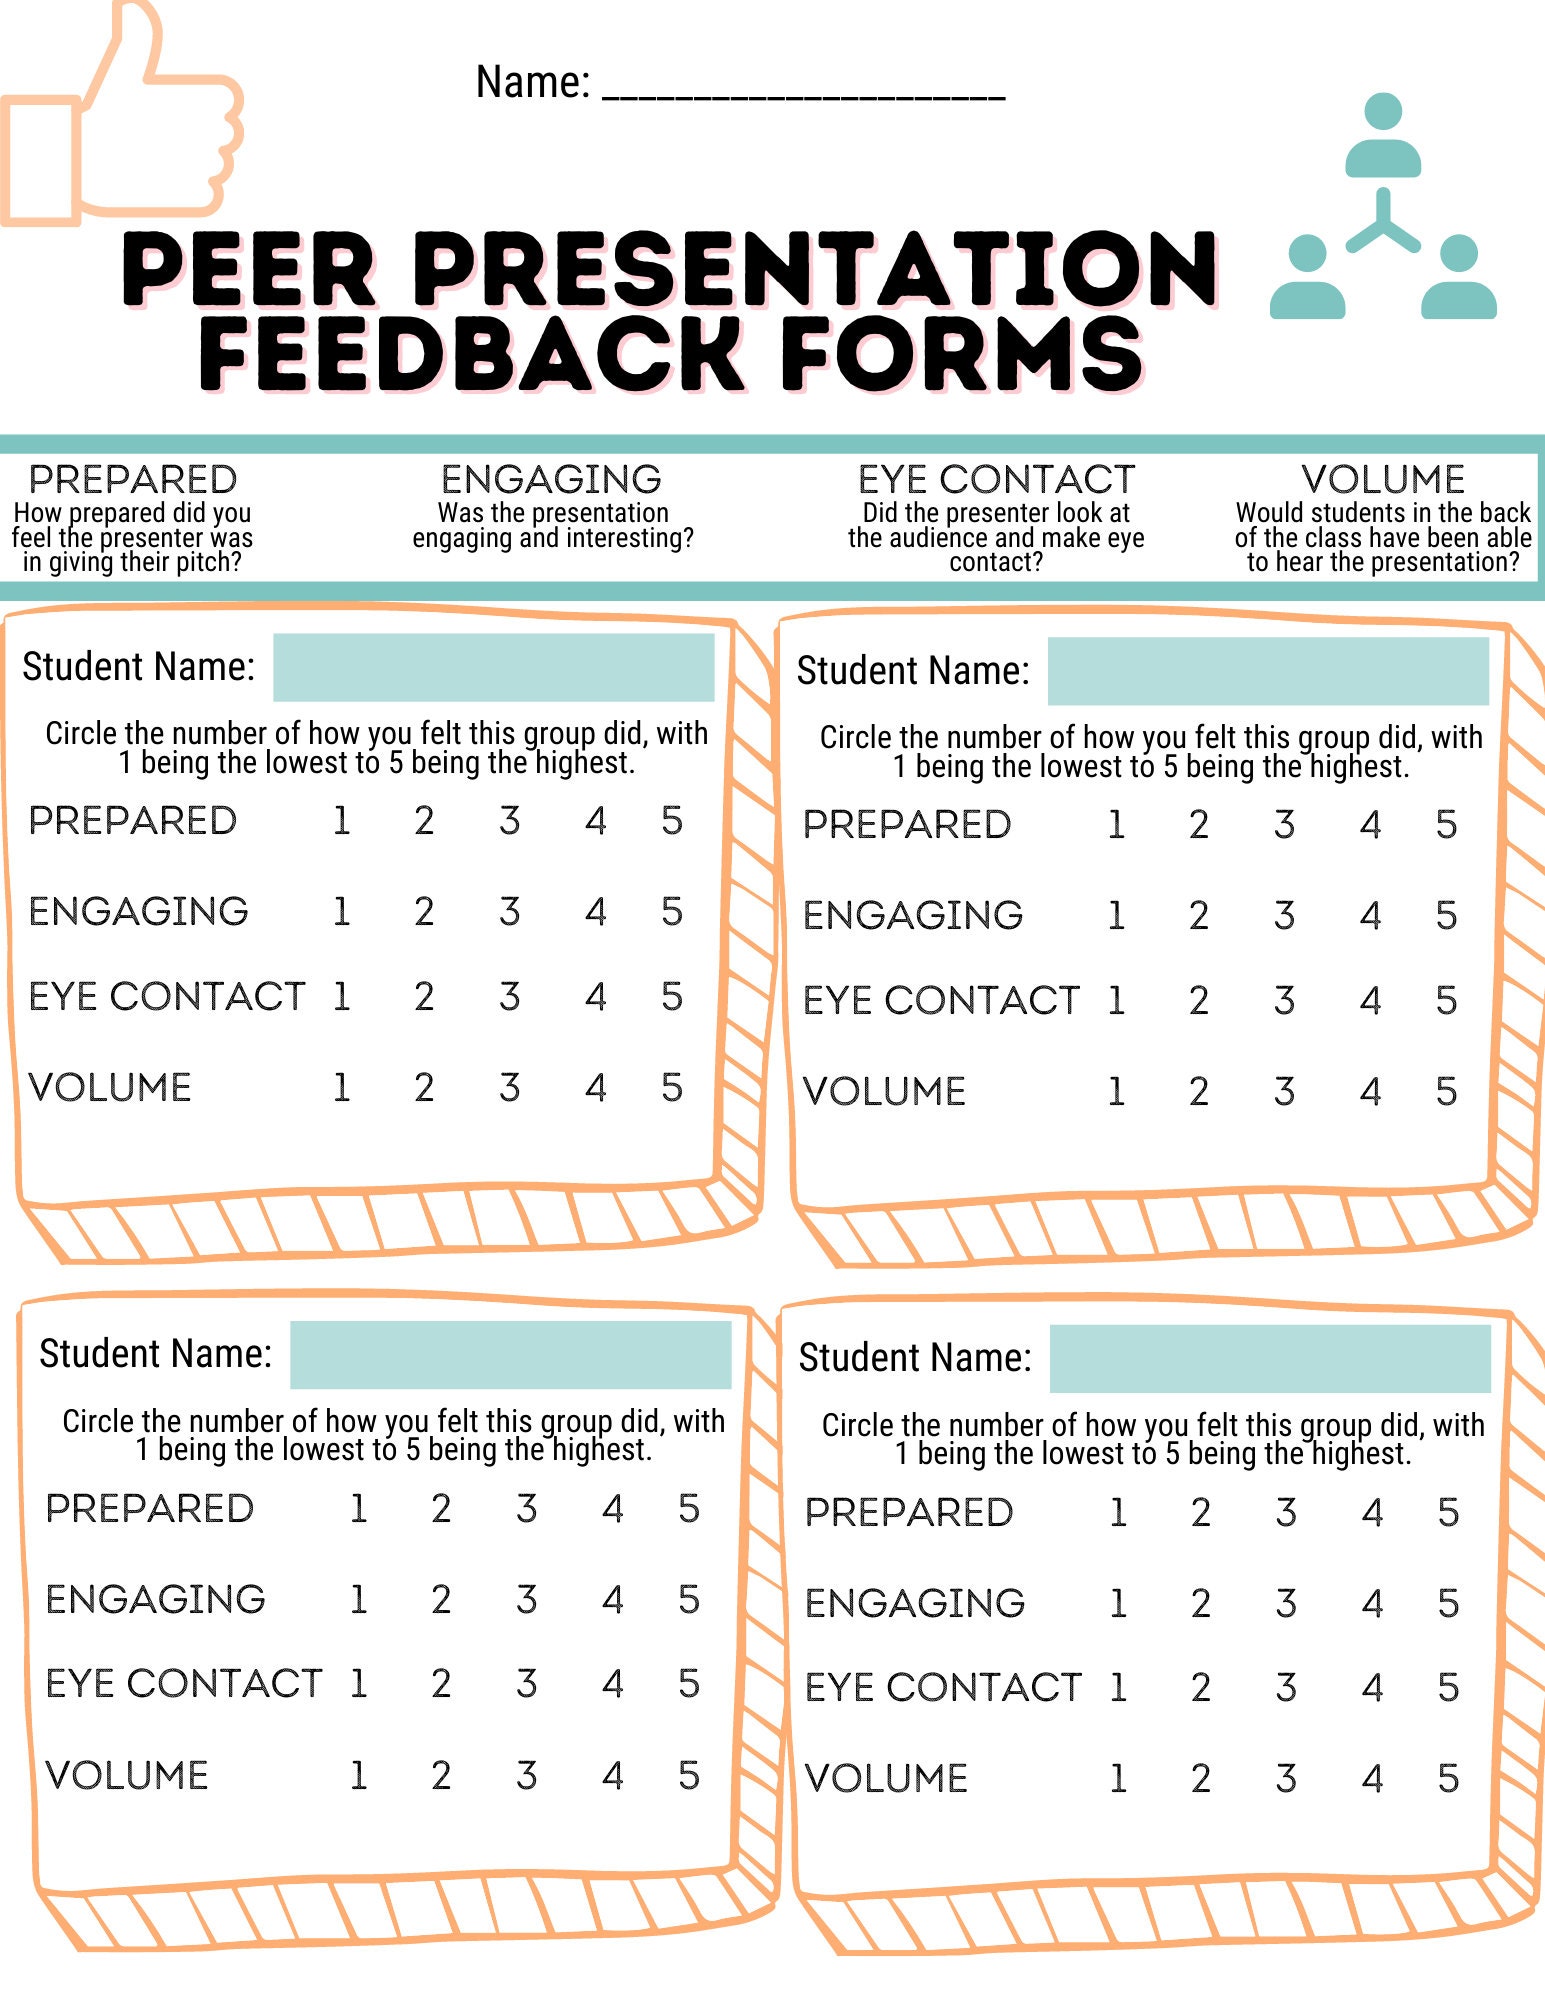 oral presentation peer feedback form